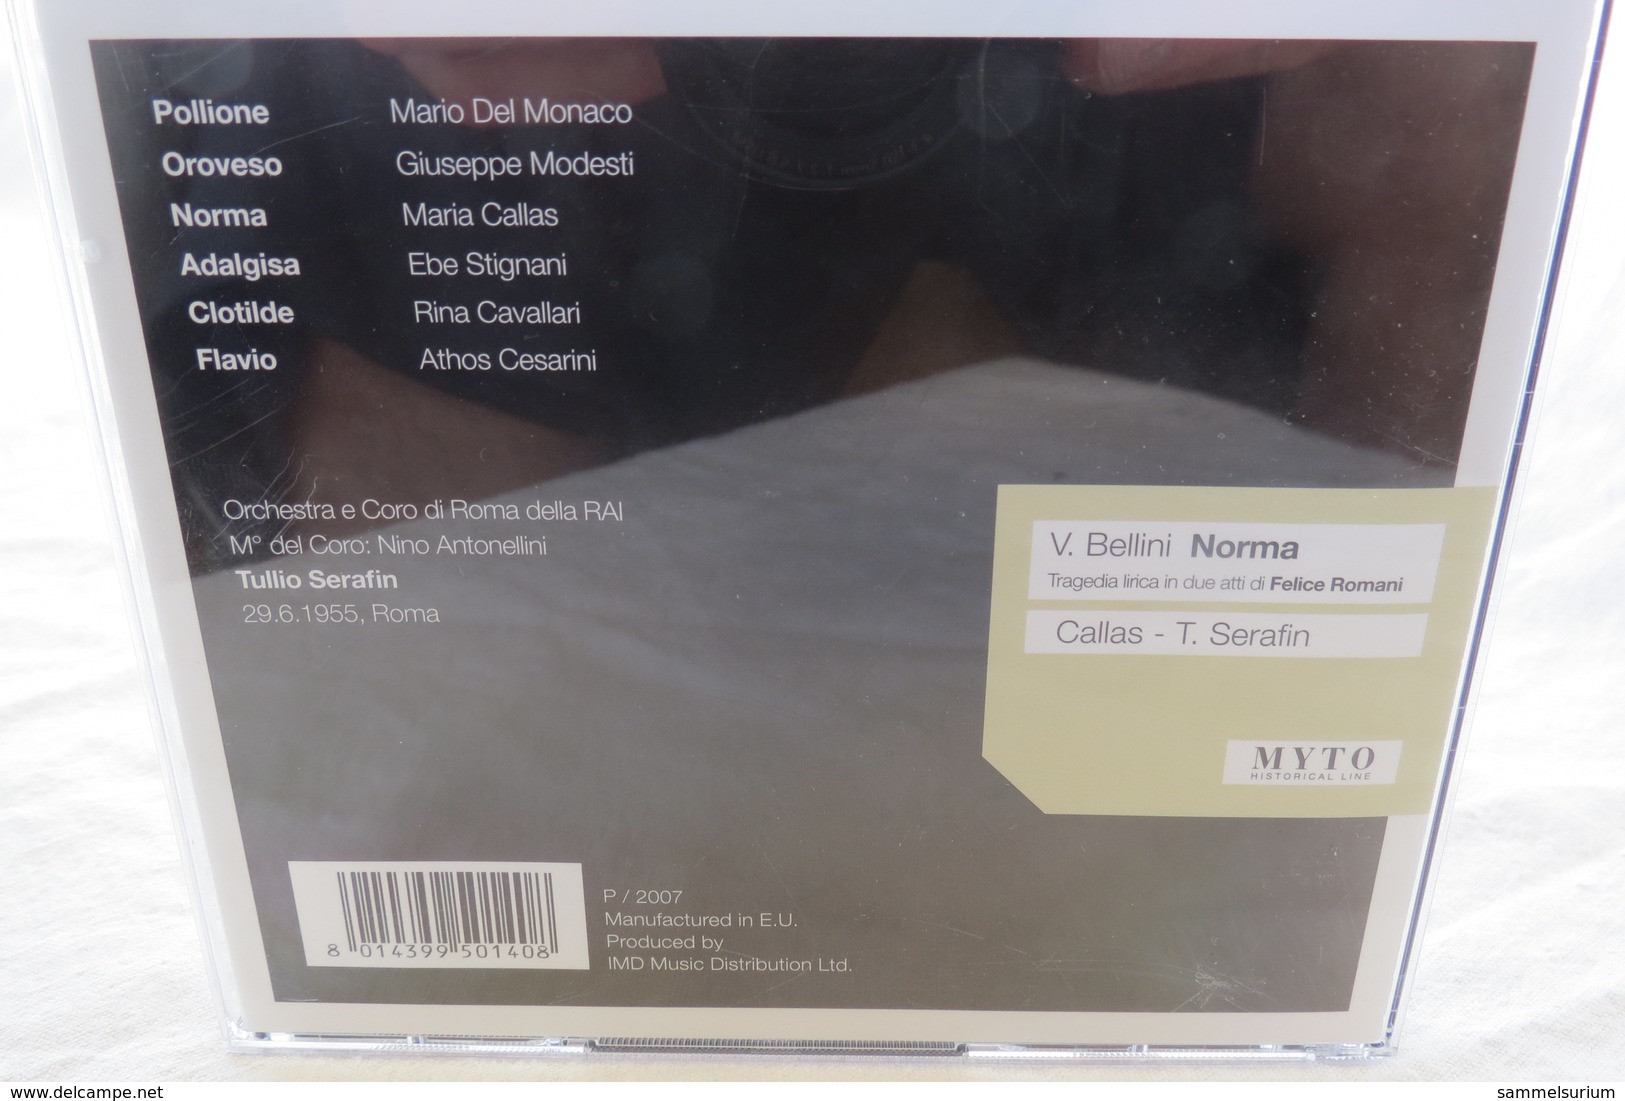 2 CDs "Vincenzo Bellini - Norma" M. Callas, Tullio Serafin - Opéra & Opérette